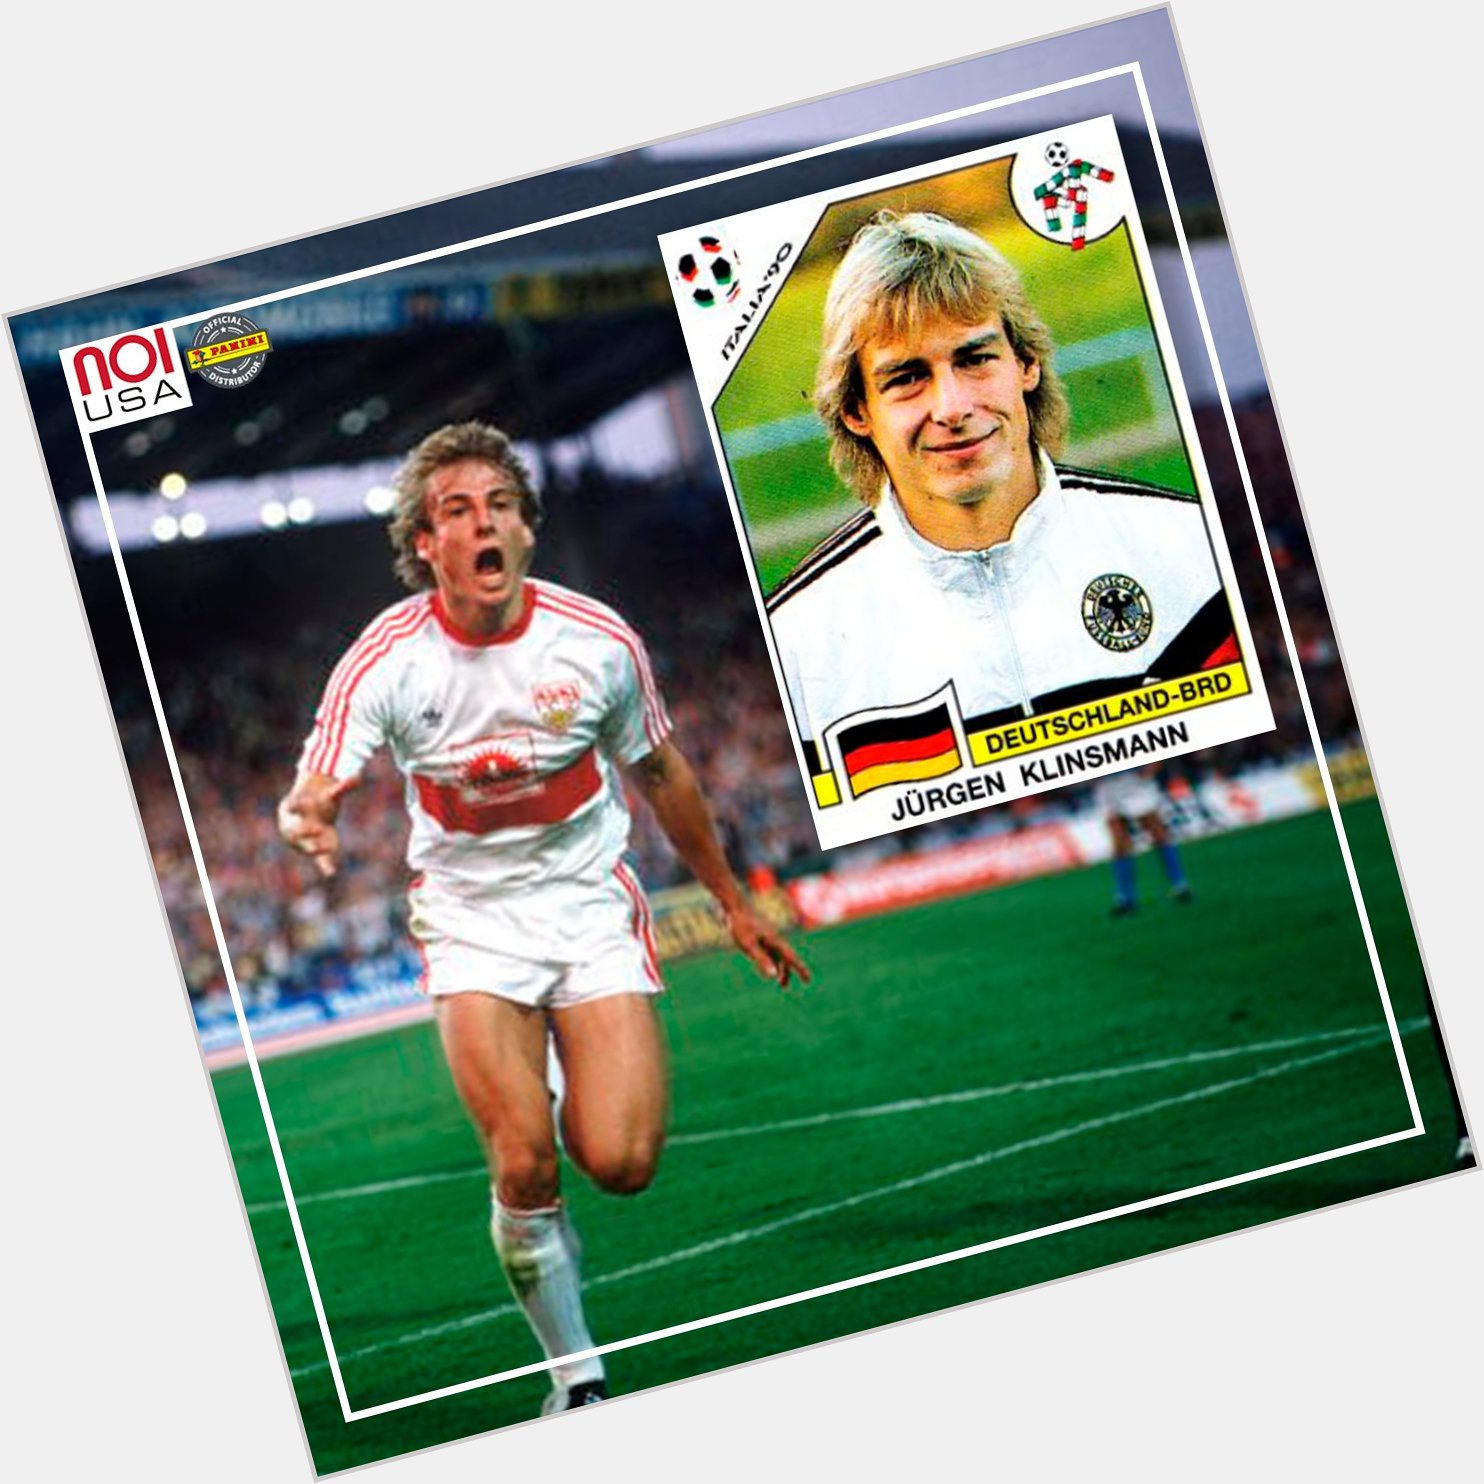 Happy birthday, Jurgen Klinsmann, one of the Italy 90 hero! 